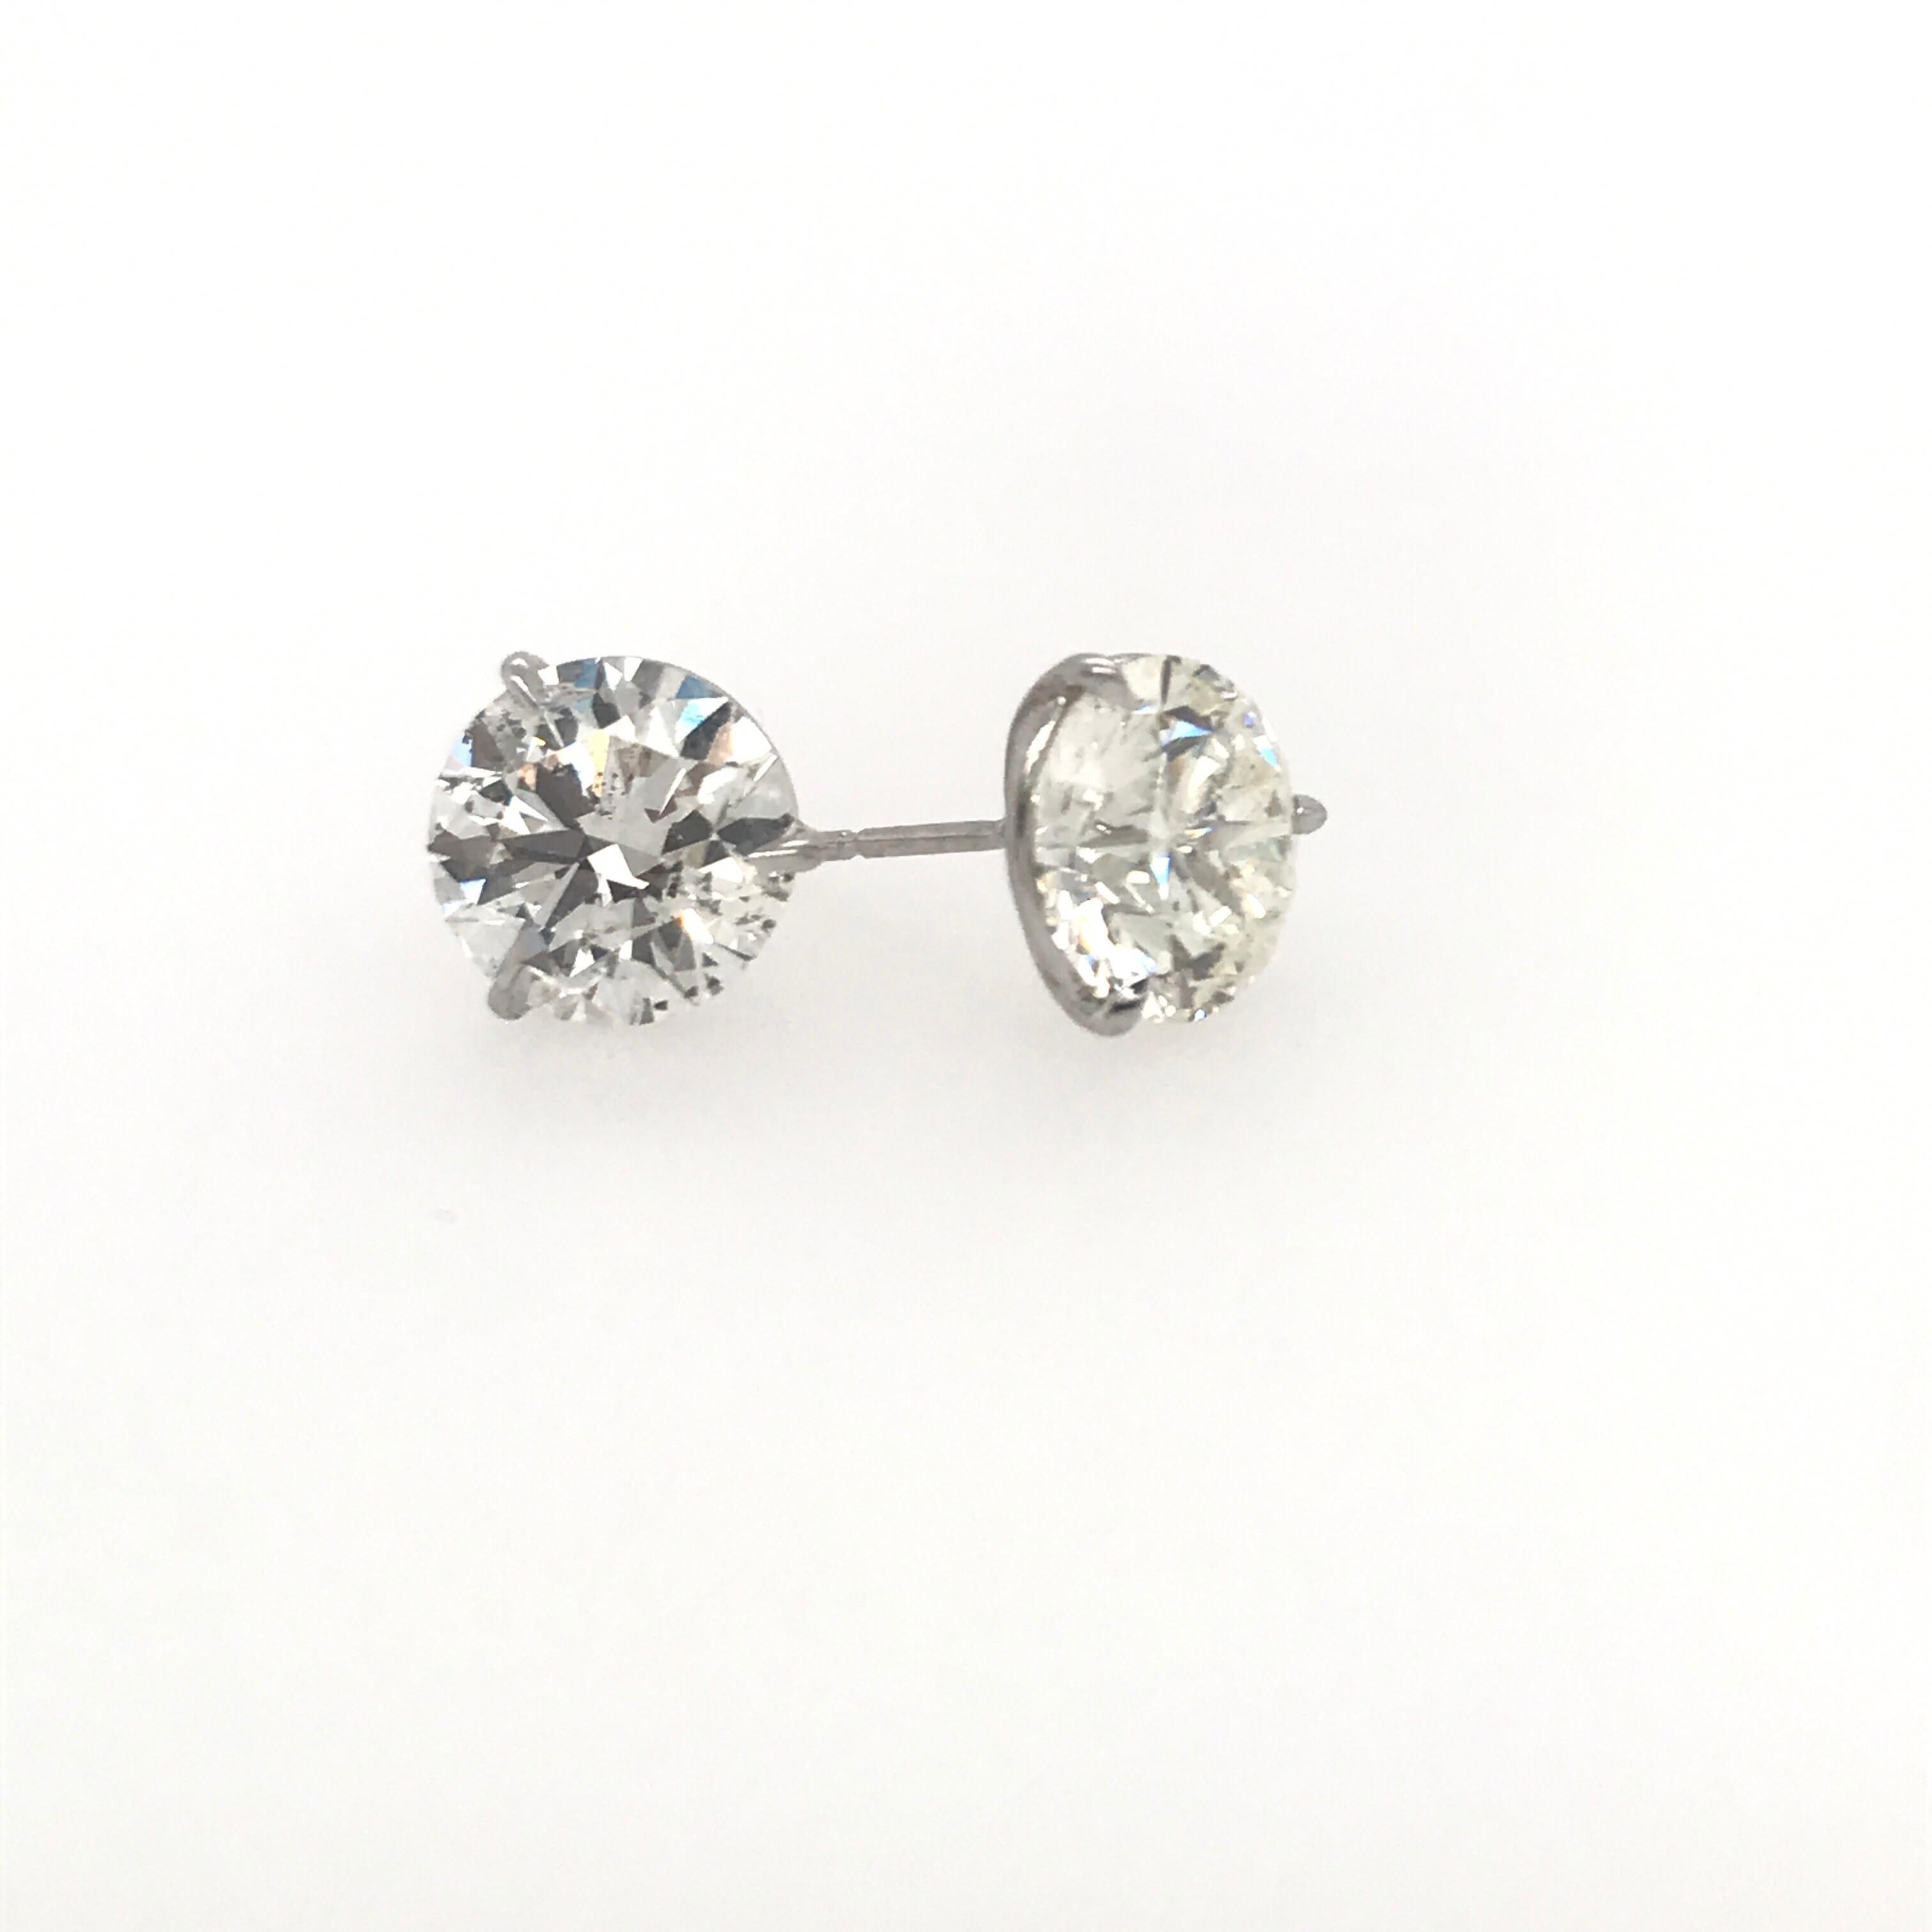 Contemporary Diamond Stud Earrings 4.81 Carat I-J I1